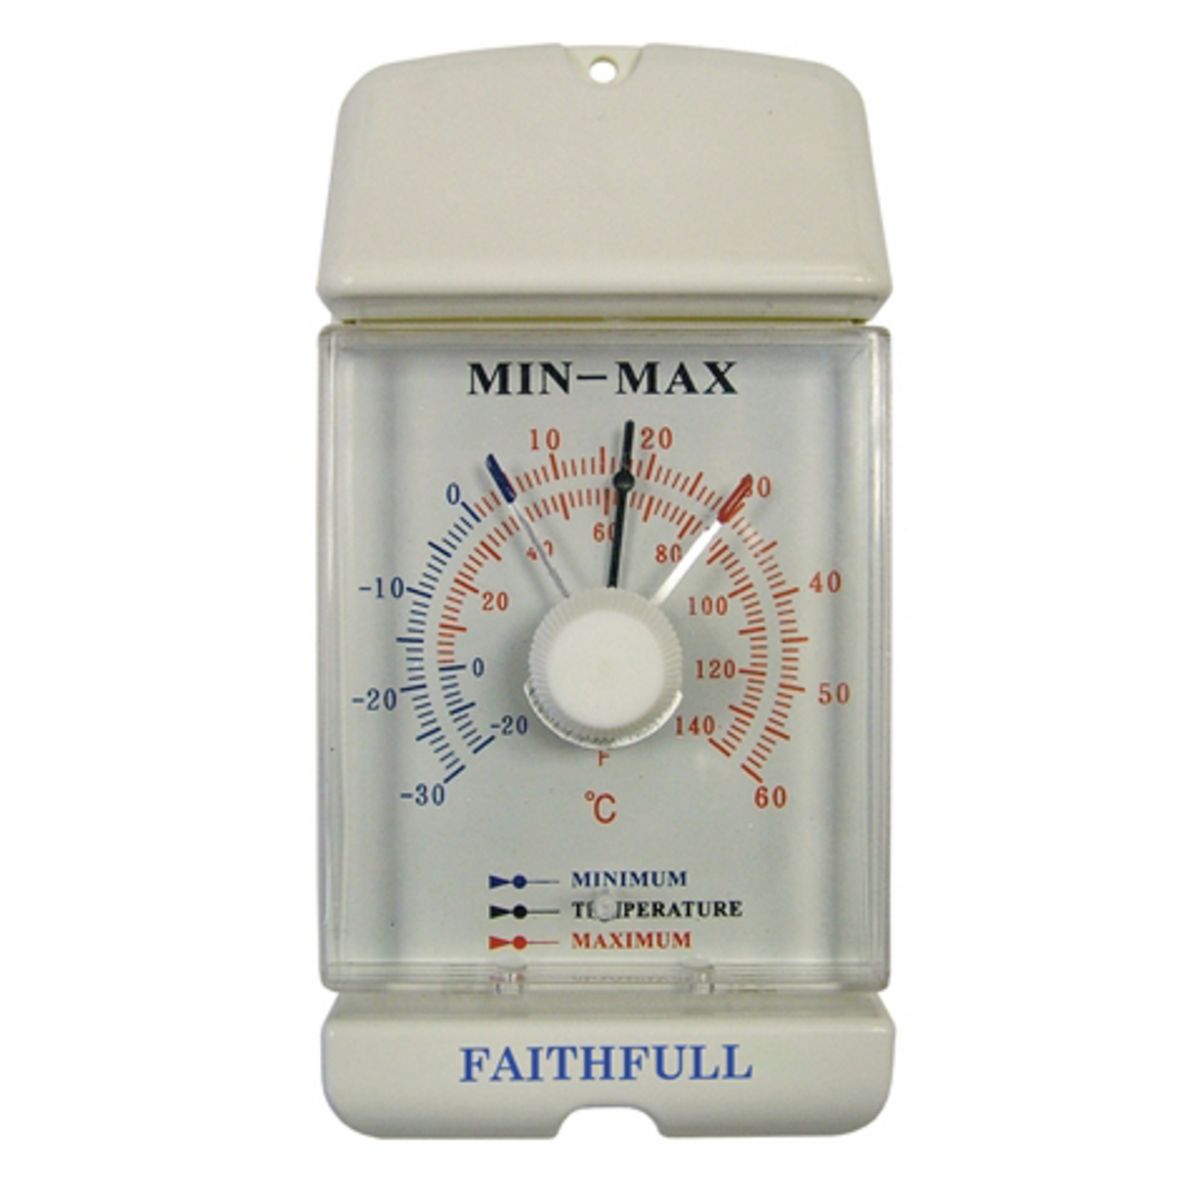 FAITHFULL Thermomètre cadran mini-maxi pas cher 